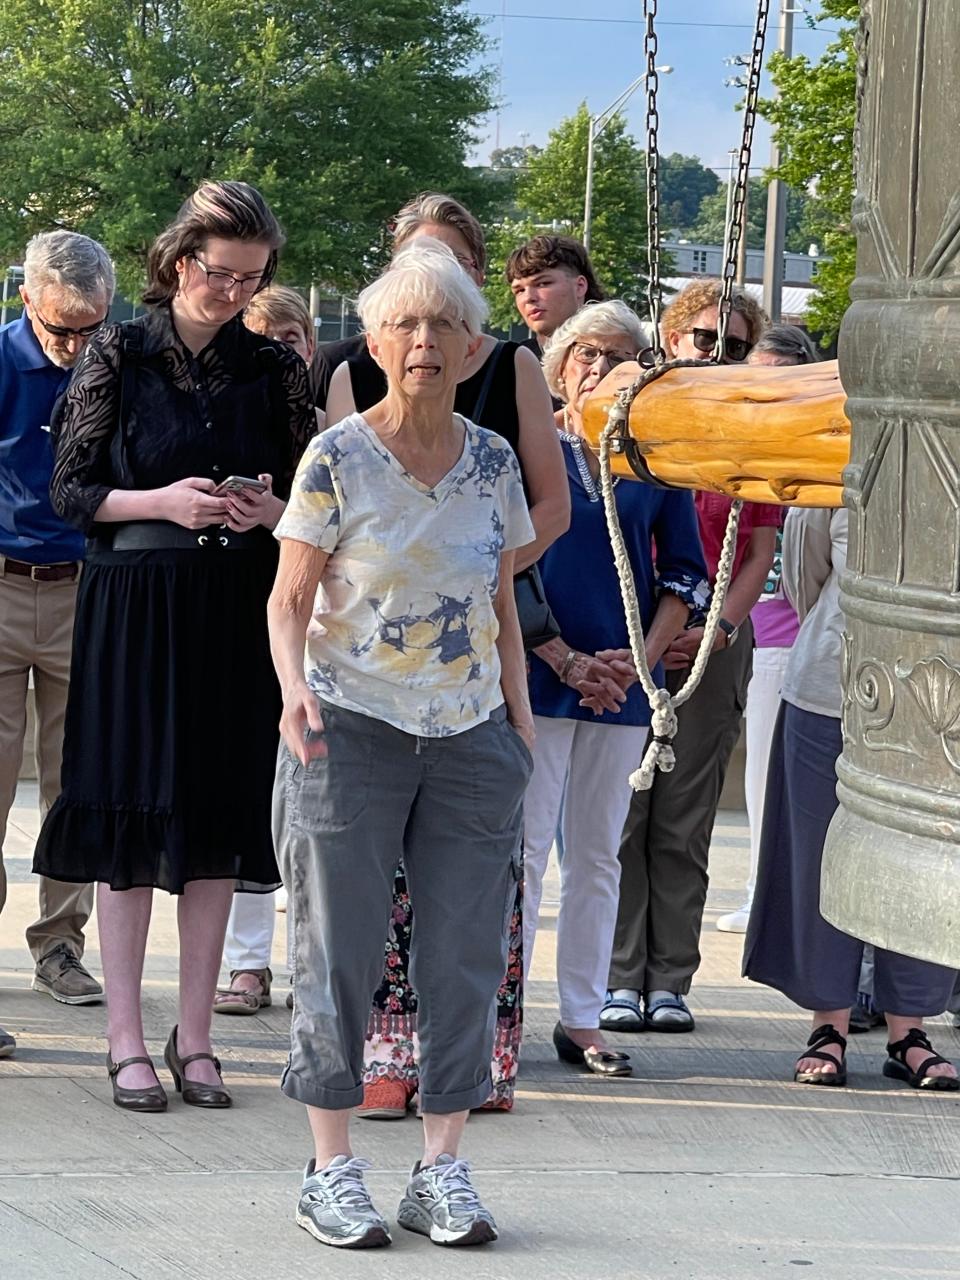 Abbie Moore, an Oak Ridge Unitarian Universalist Church member, said that Shigeko Uppuluri tended the flowers at the original site of the International Friendship Bell.